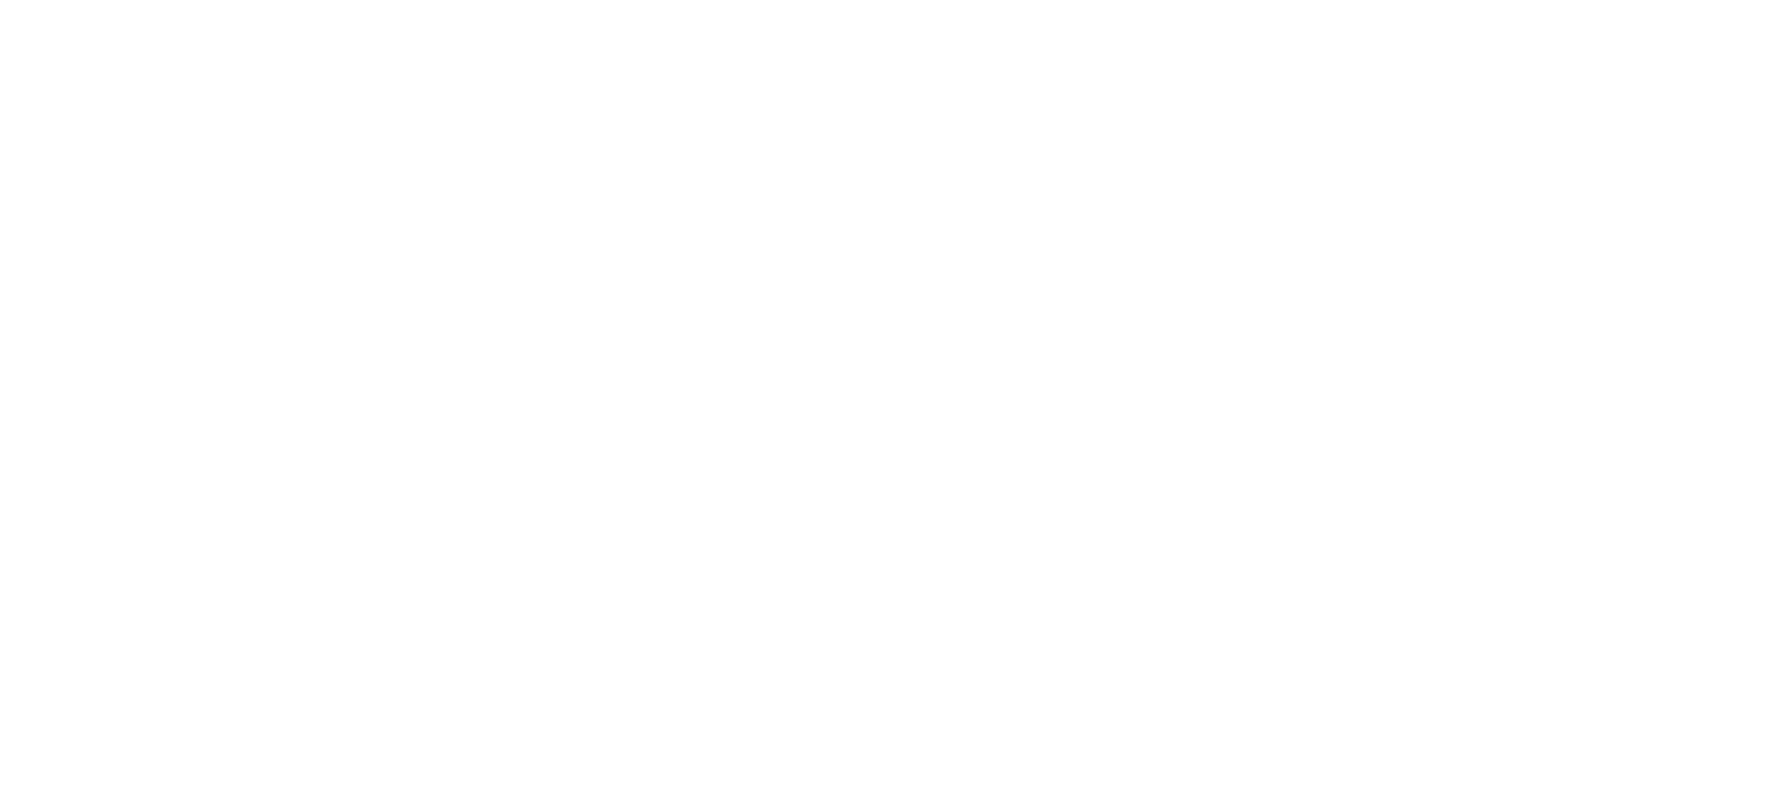 The Christmas Bow logo